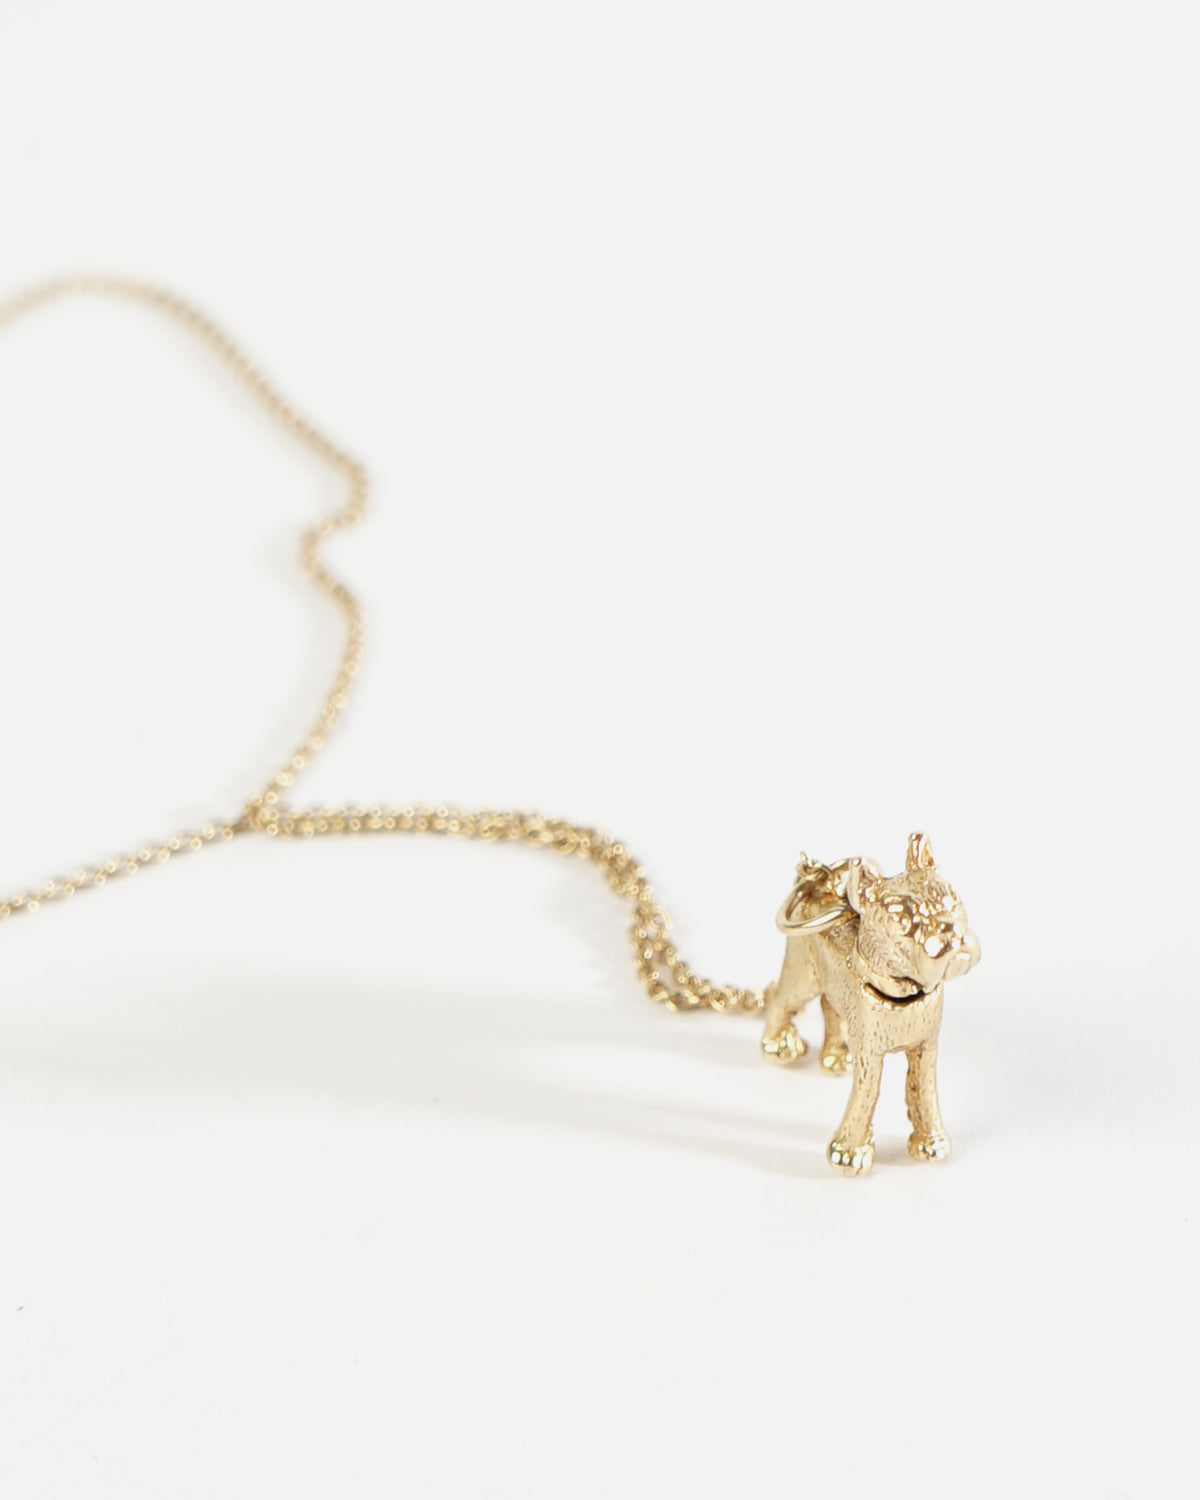 14k Gold Chain Necklace w/ Dog Charm